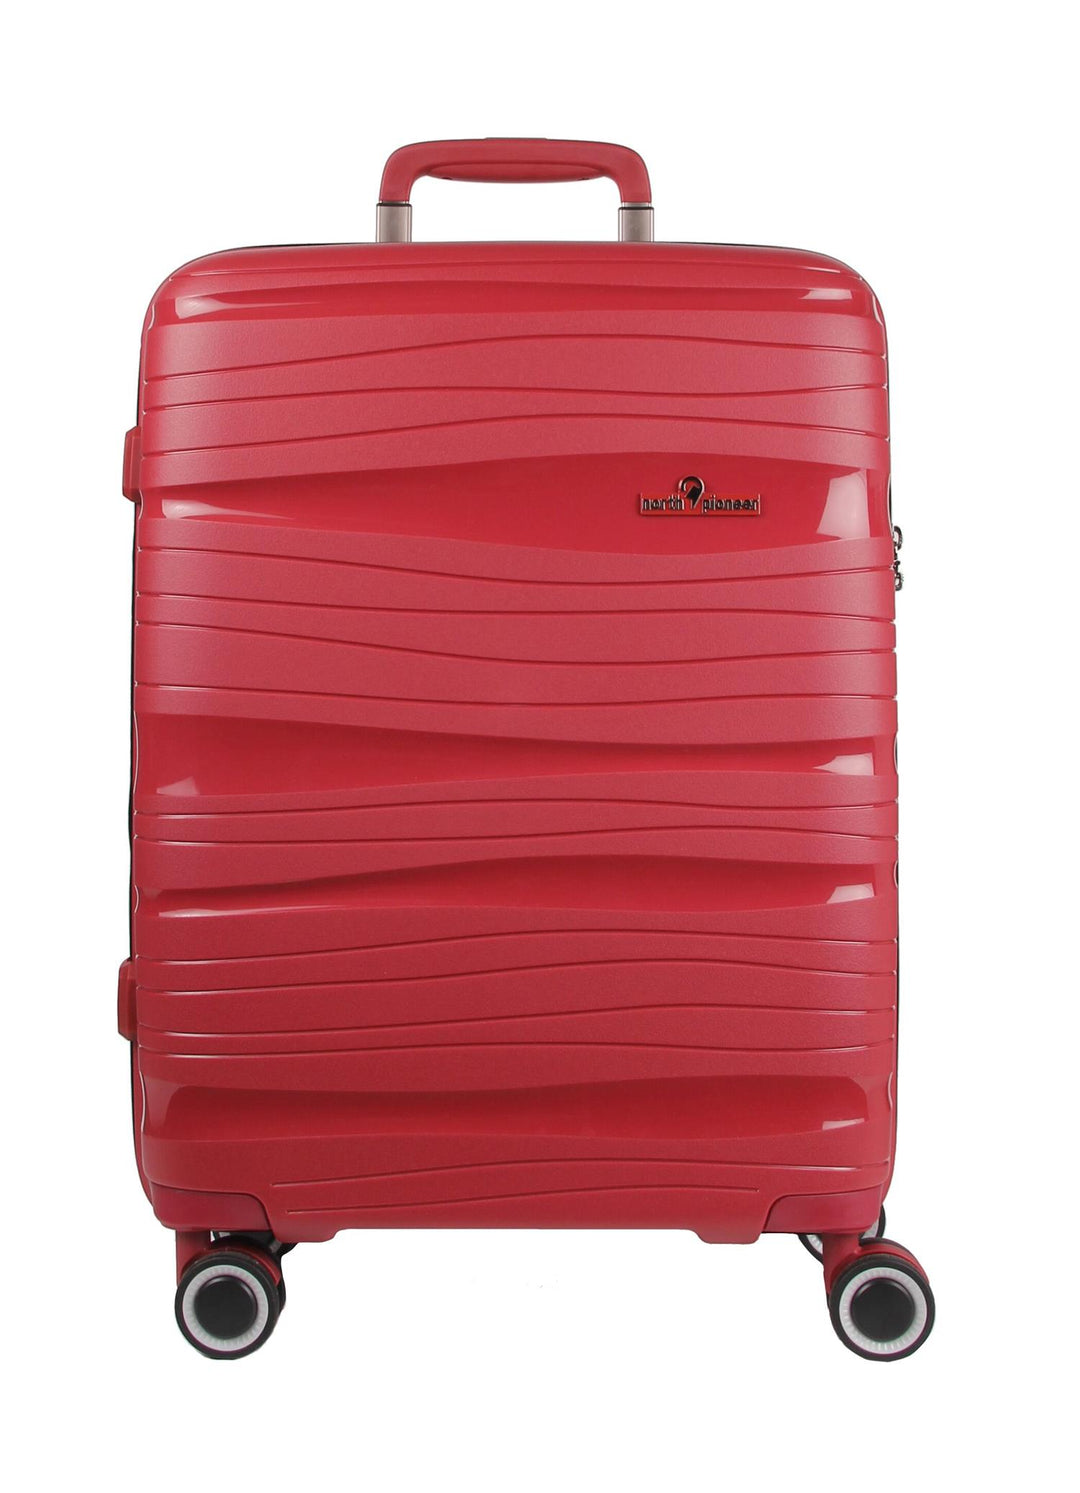 OSLO Suitcase 67